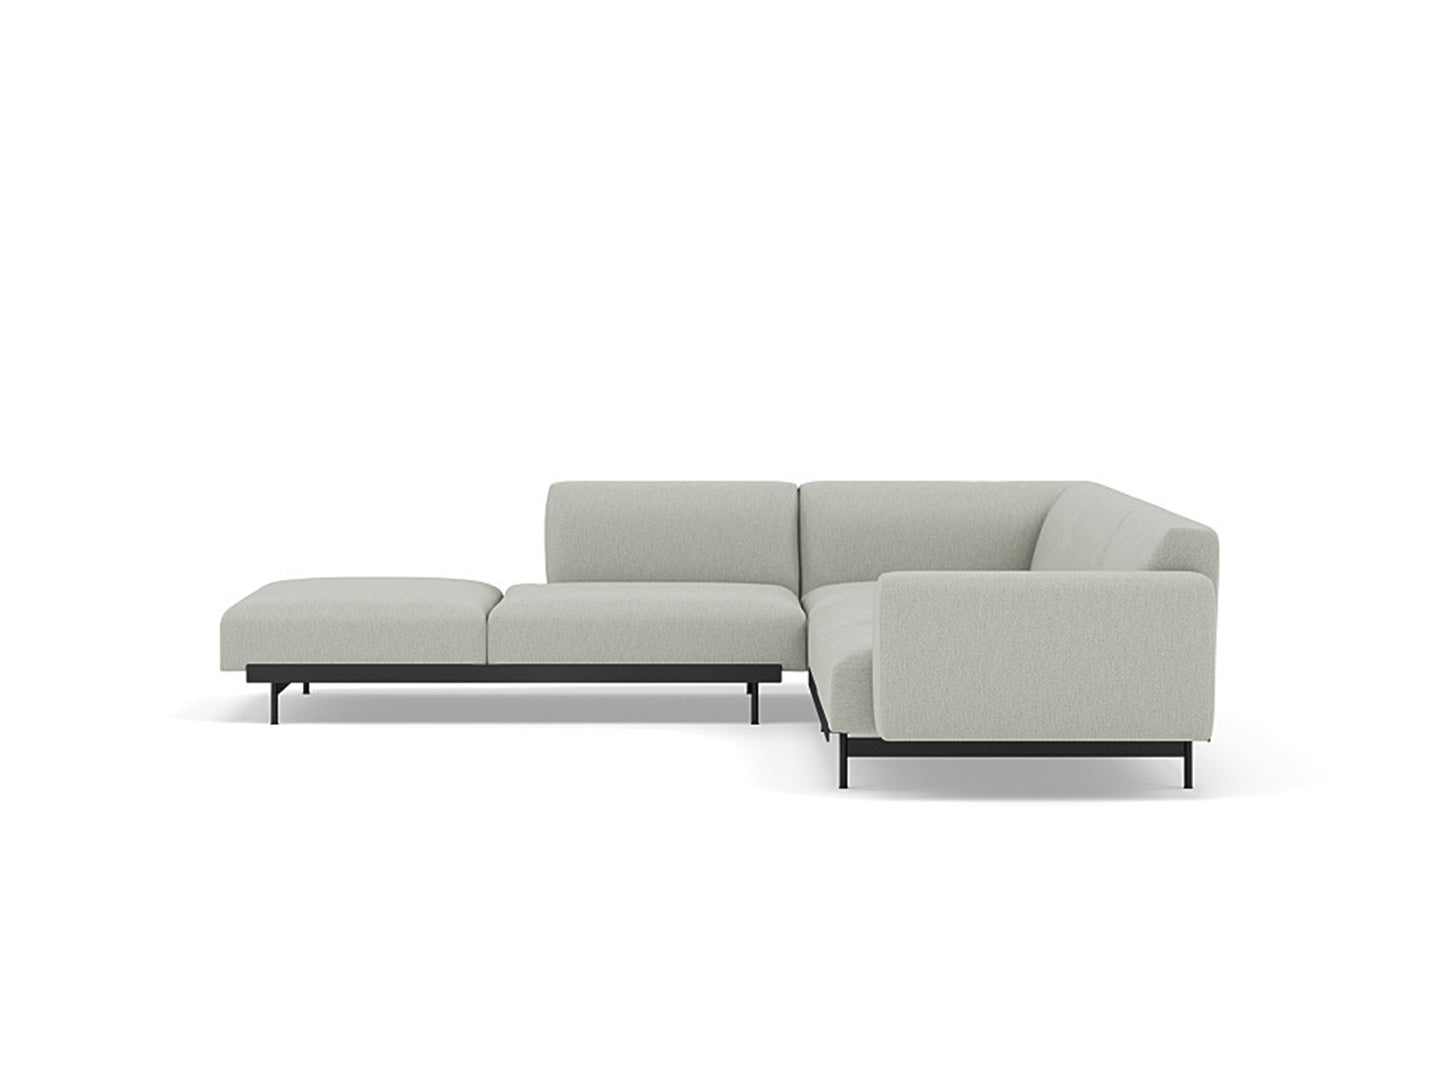 In Situ Corner Modular Sofa by Muuto - Configuration 2 / Clay 12